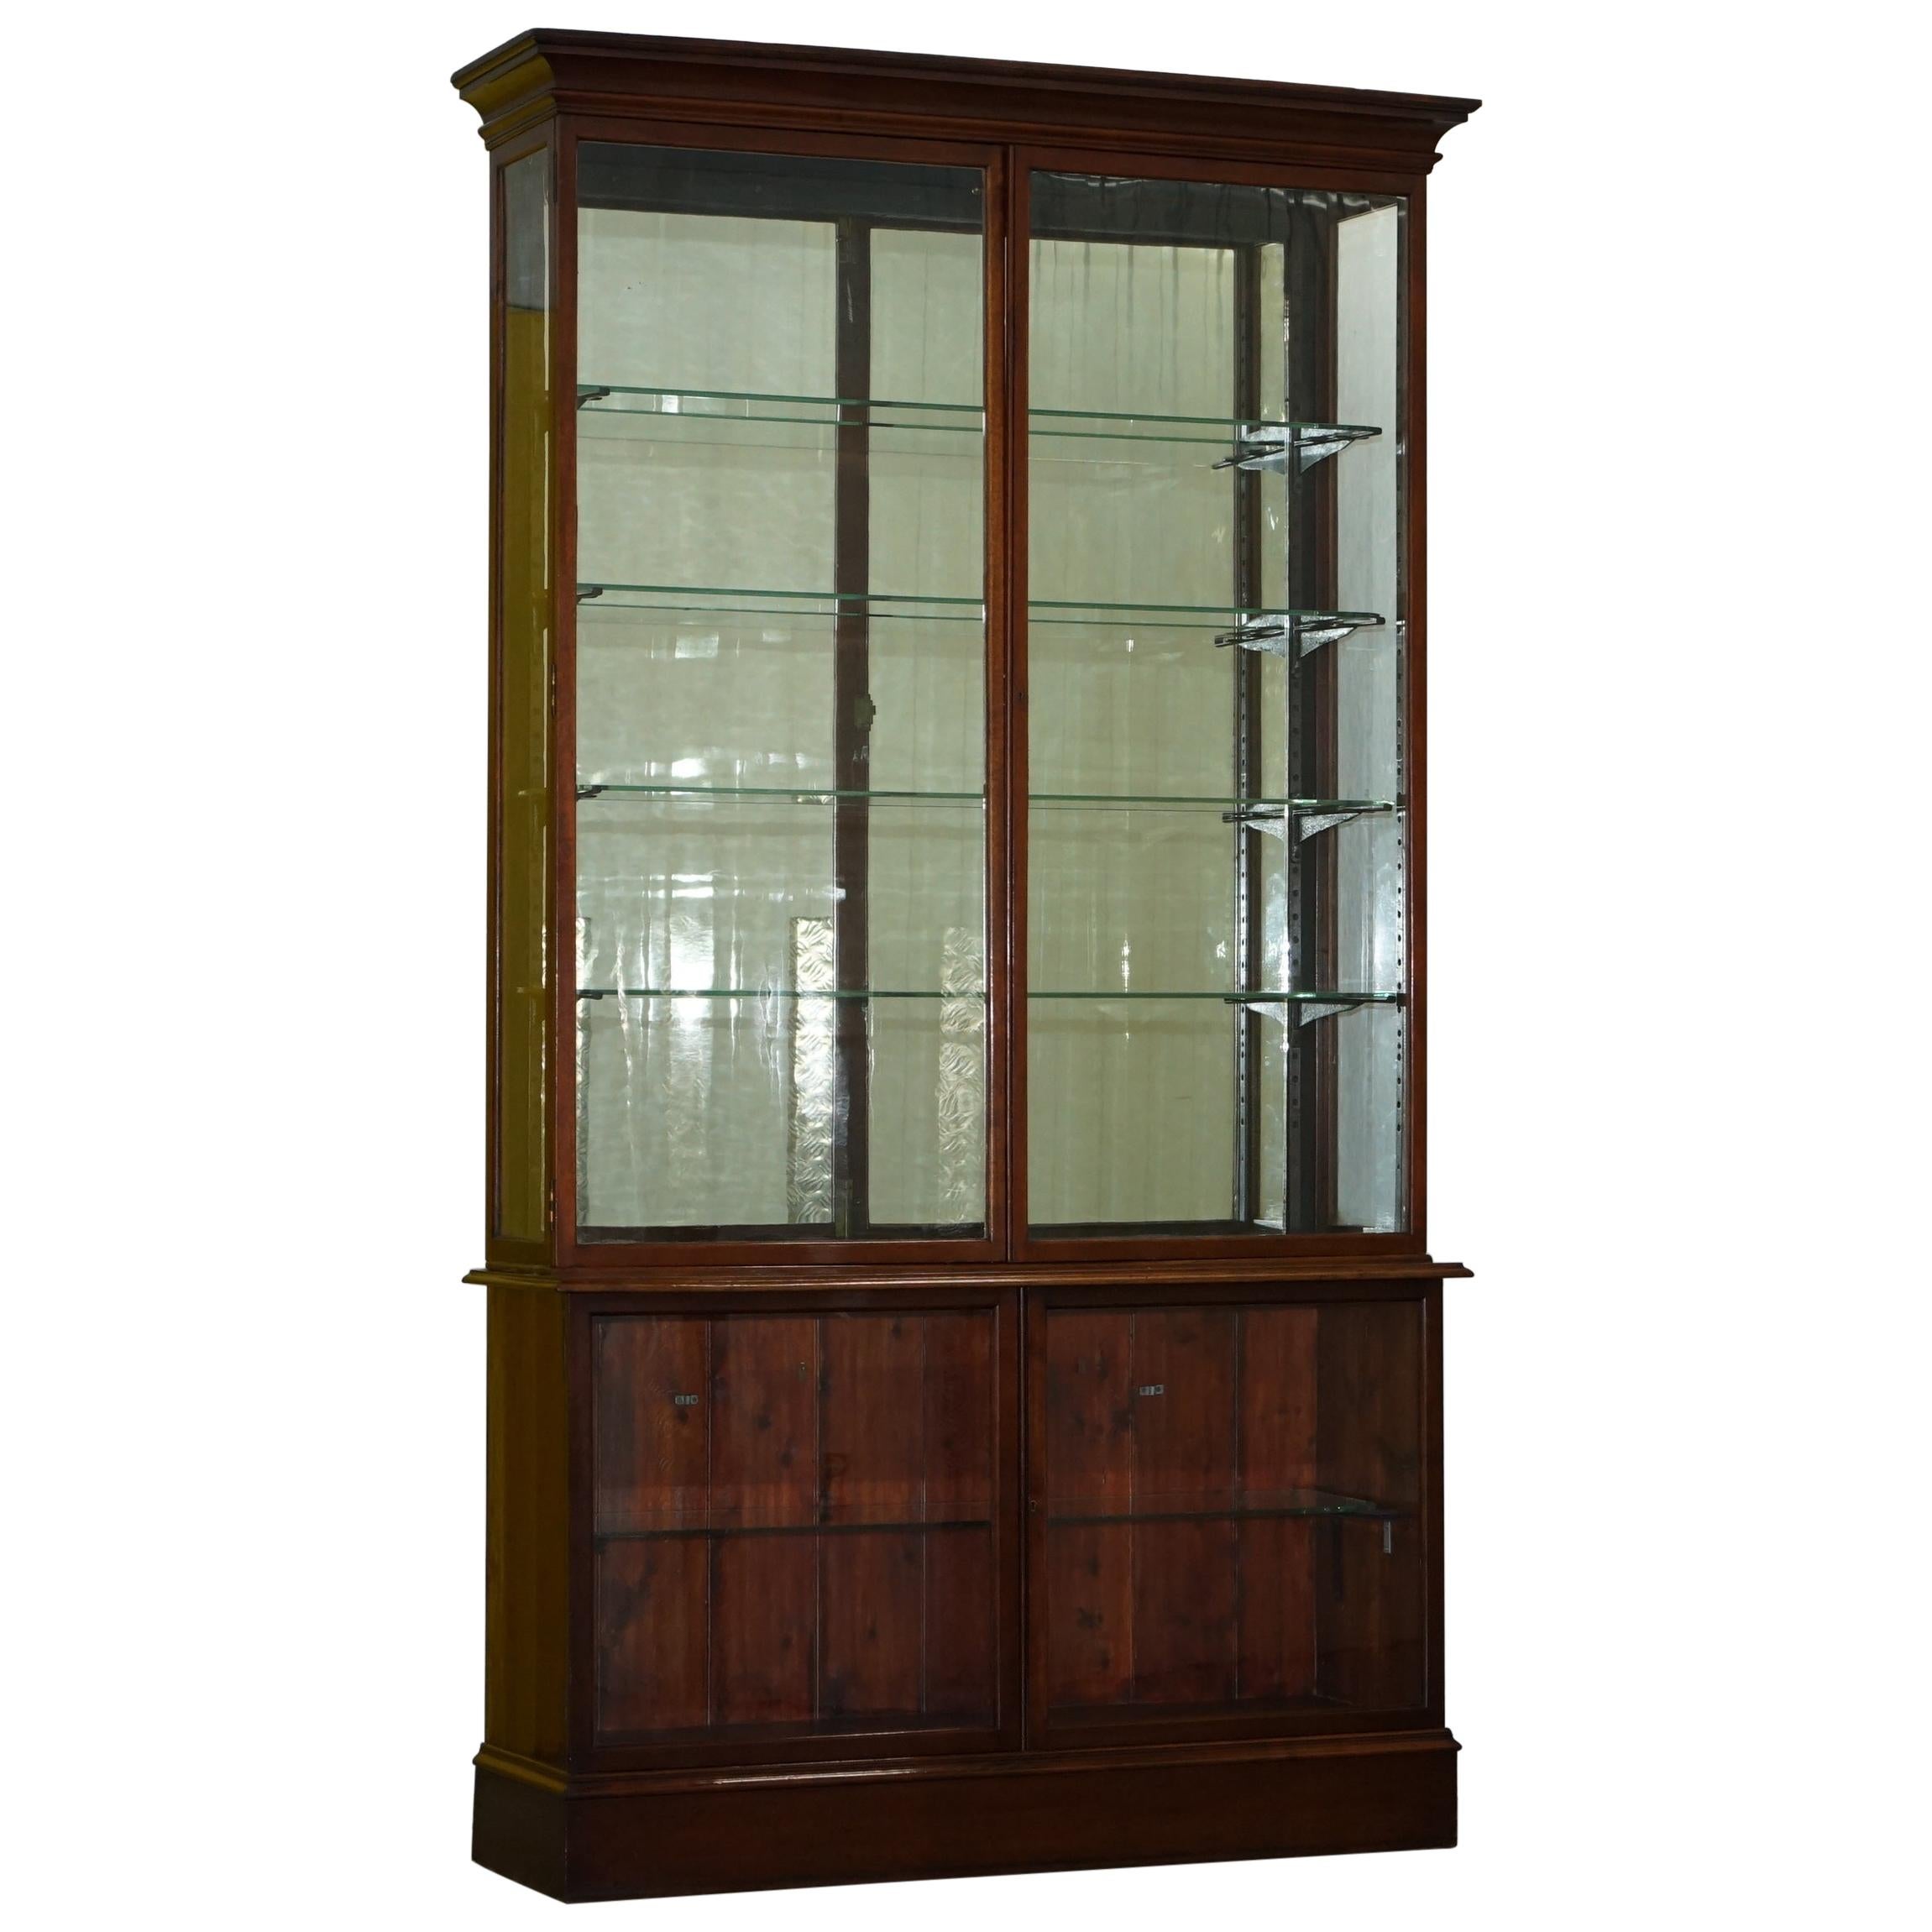 Rare Victorian Haberdashery Apothecary Shops Cabinet Fully Glazed Door Bookcase